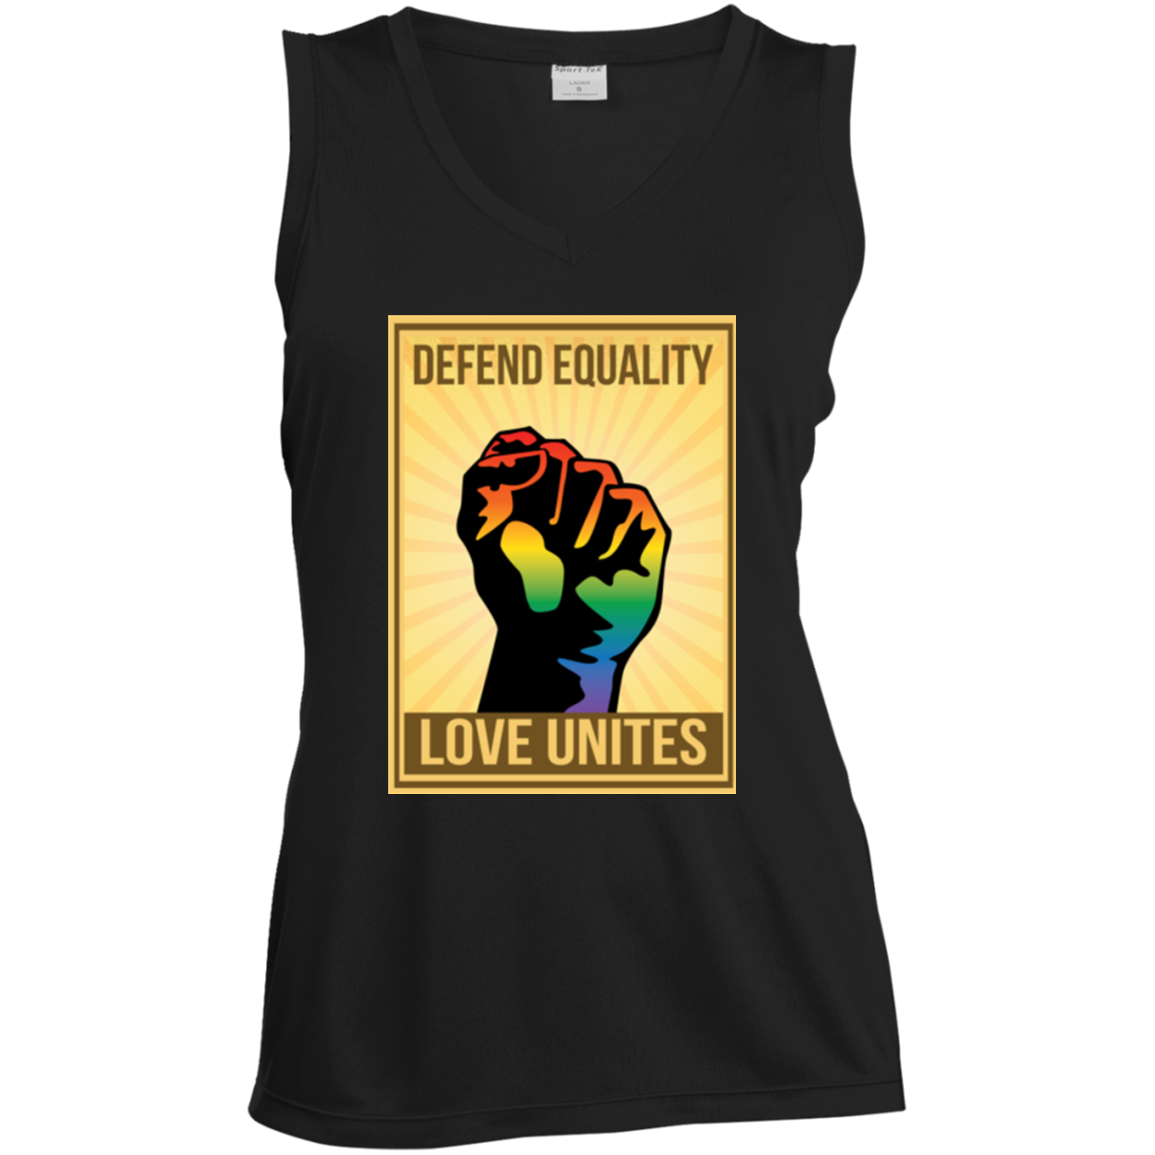 "Defend Equality, Love Unites" Gay Pride T-shirt black Color V-Neck Full Sleevless Digital Print T-shirt